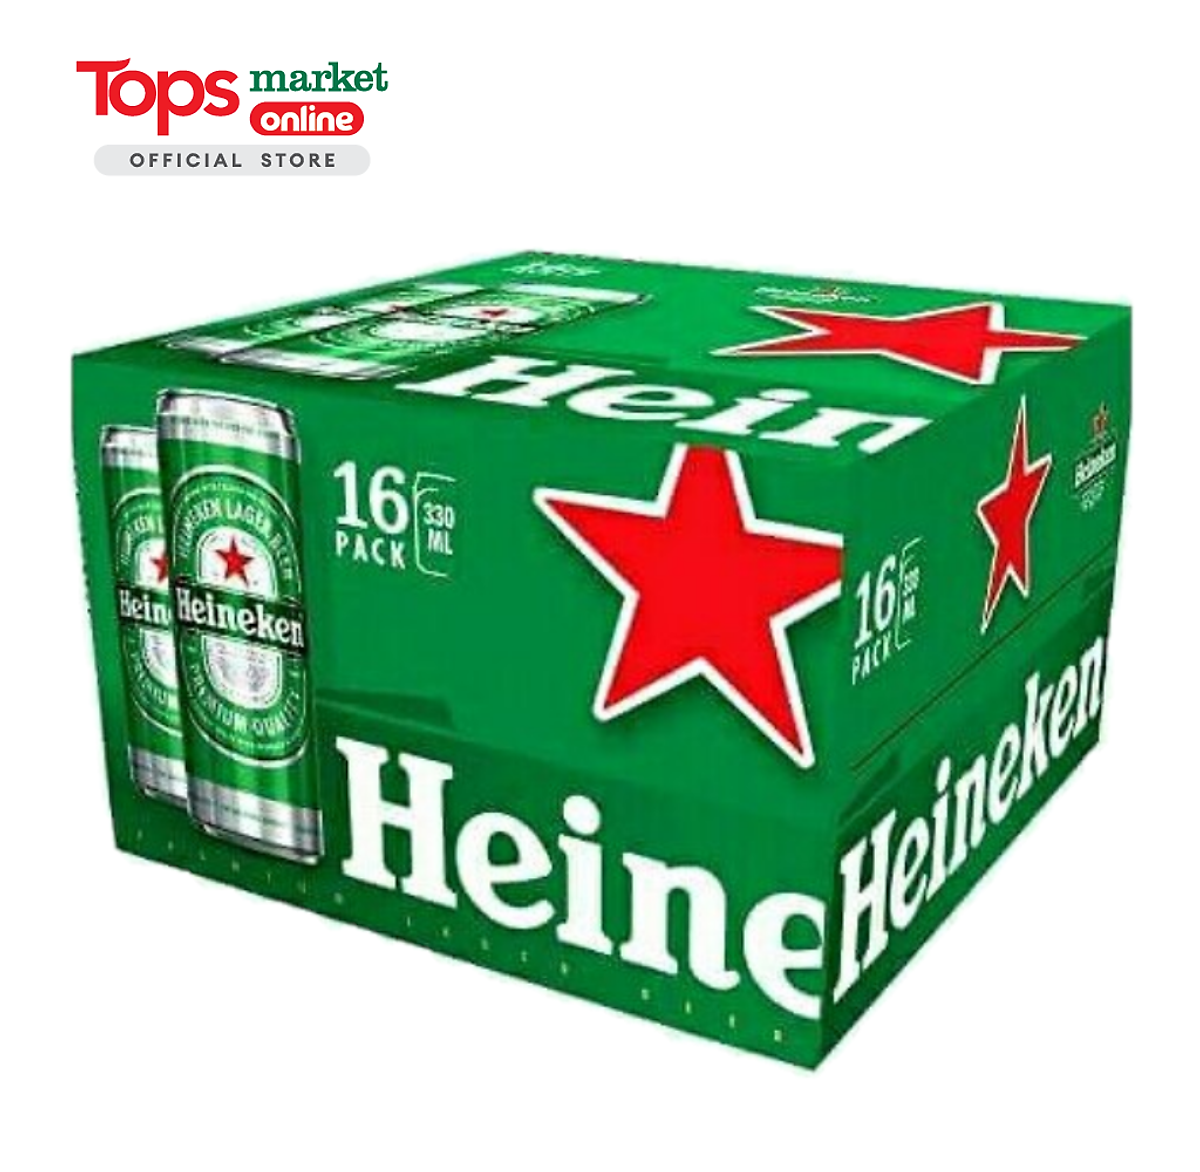 Bia Heineken có mấy loại? Bao nhiêu độ?